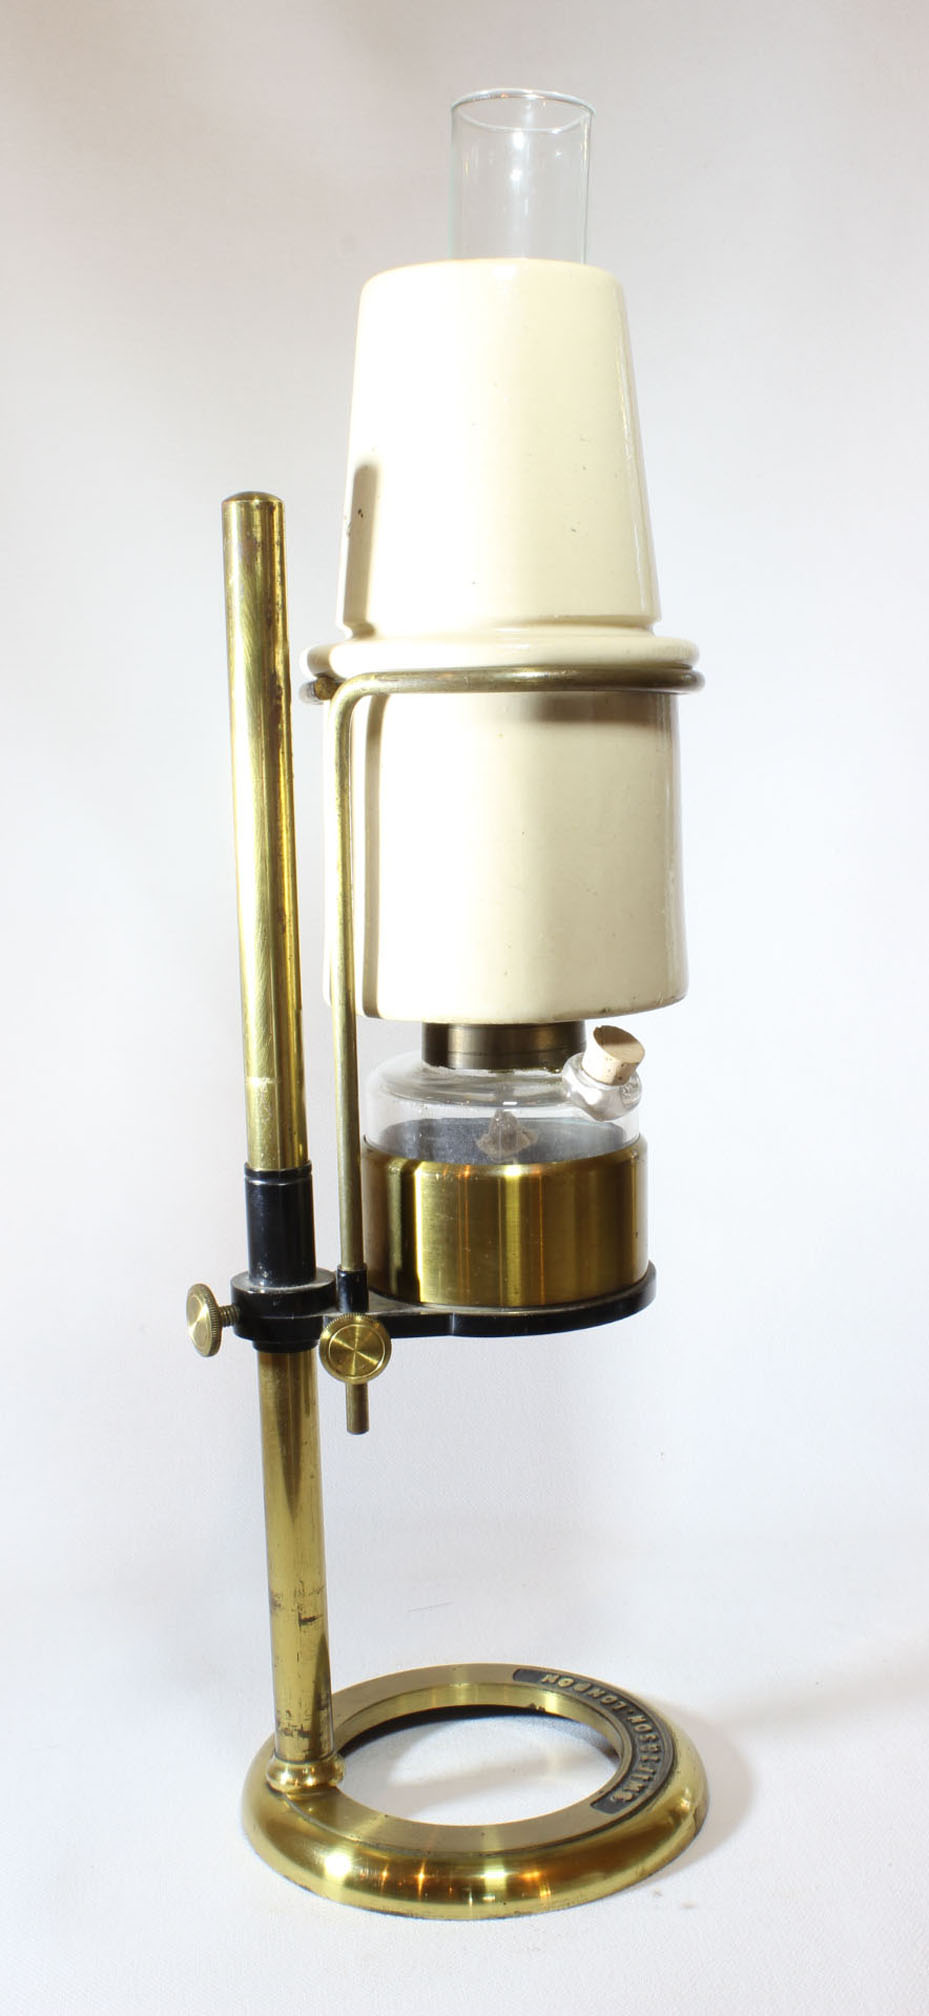 Swift oil lamp for microscope